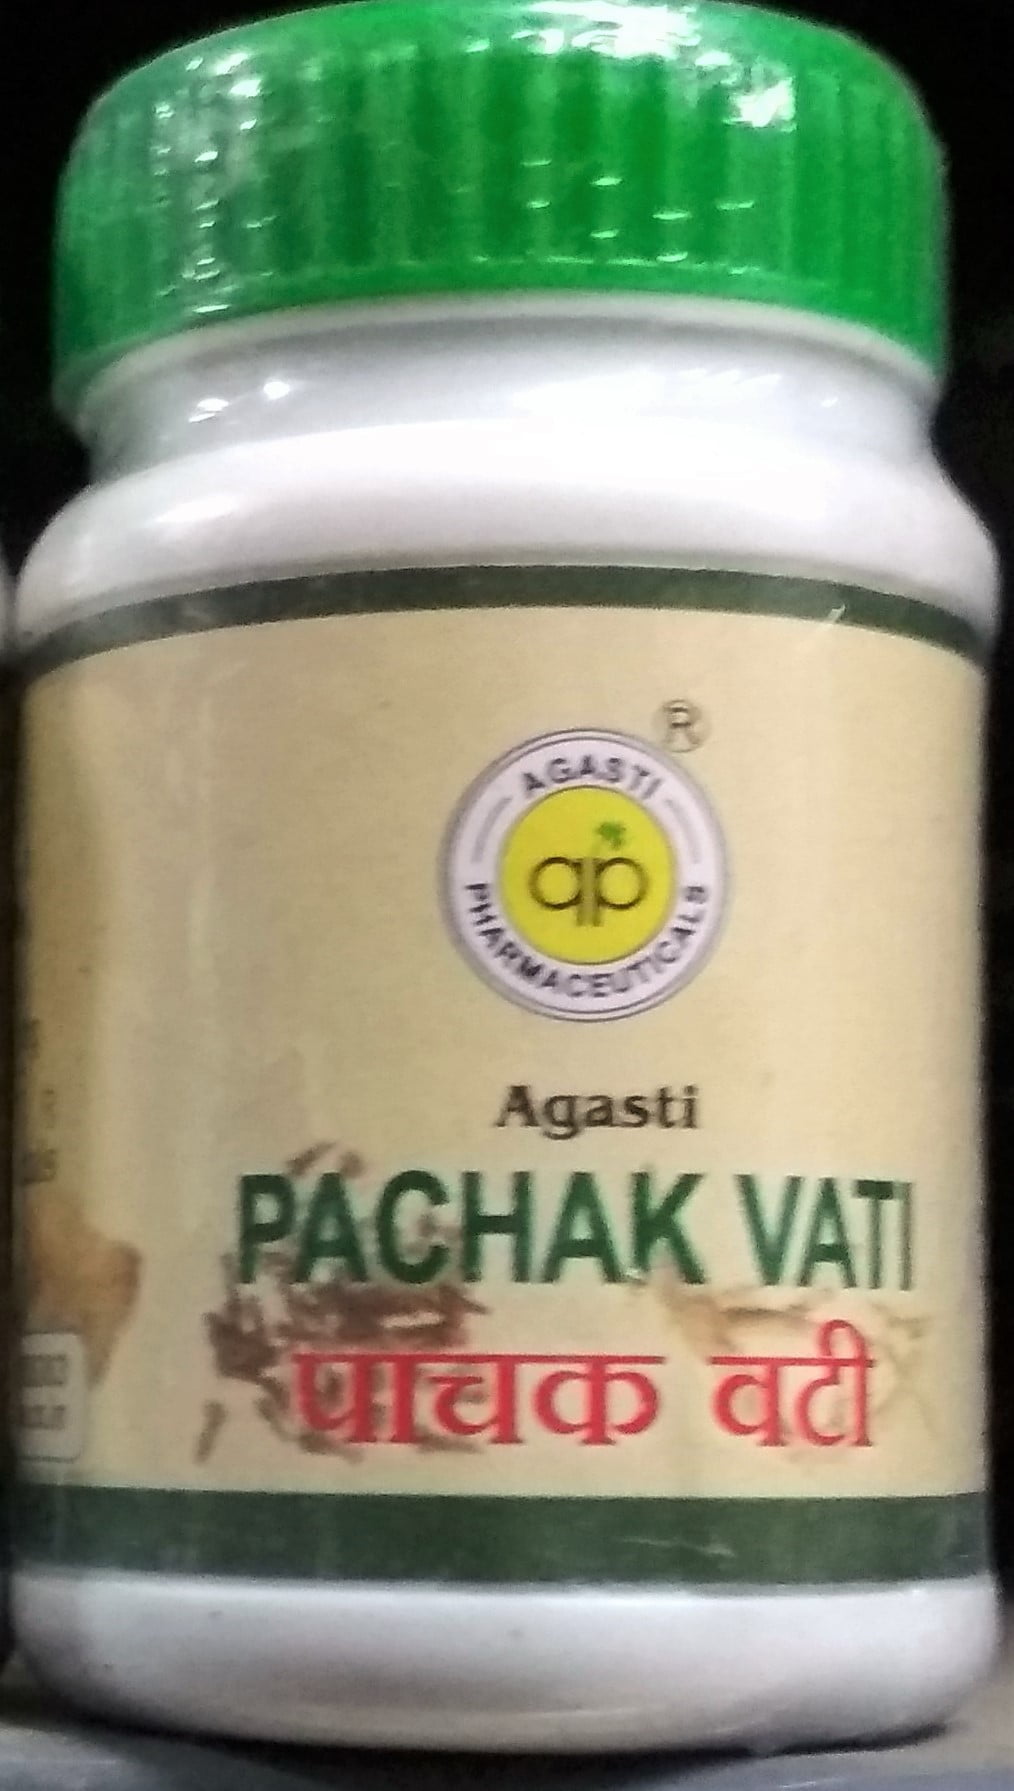 pachak vati 1 kg 2000 tablets upto 15% off Agasti Pharmaceuticals